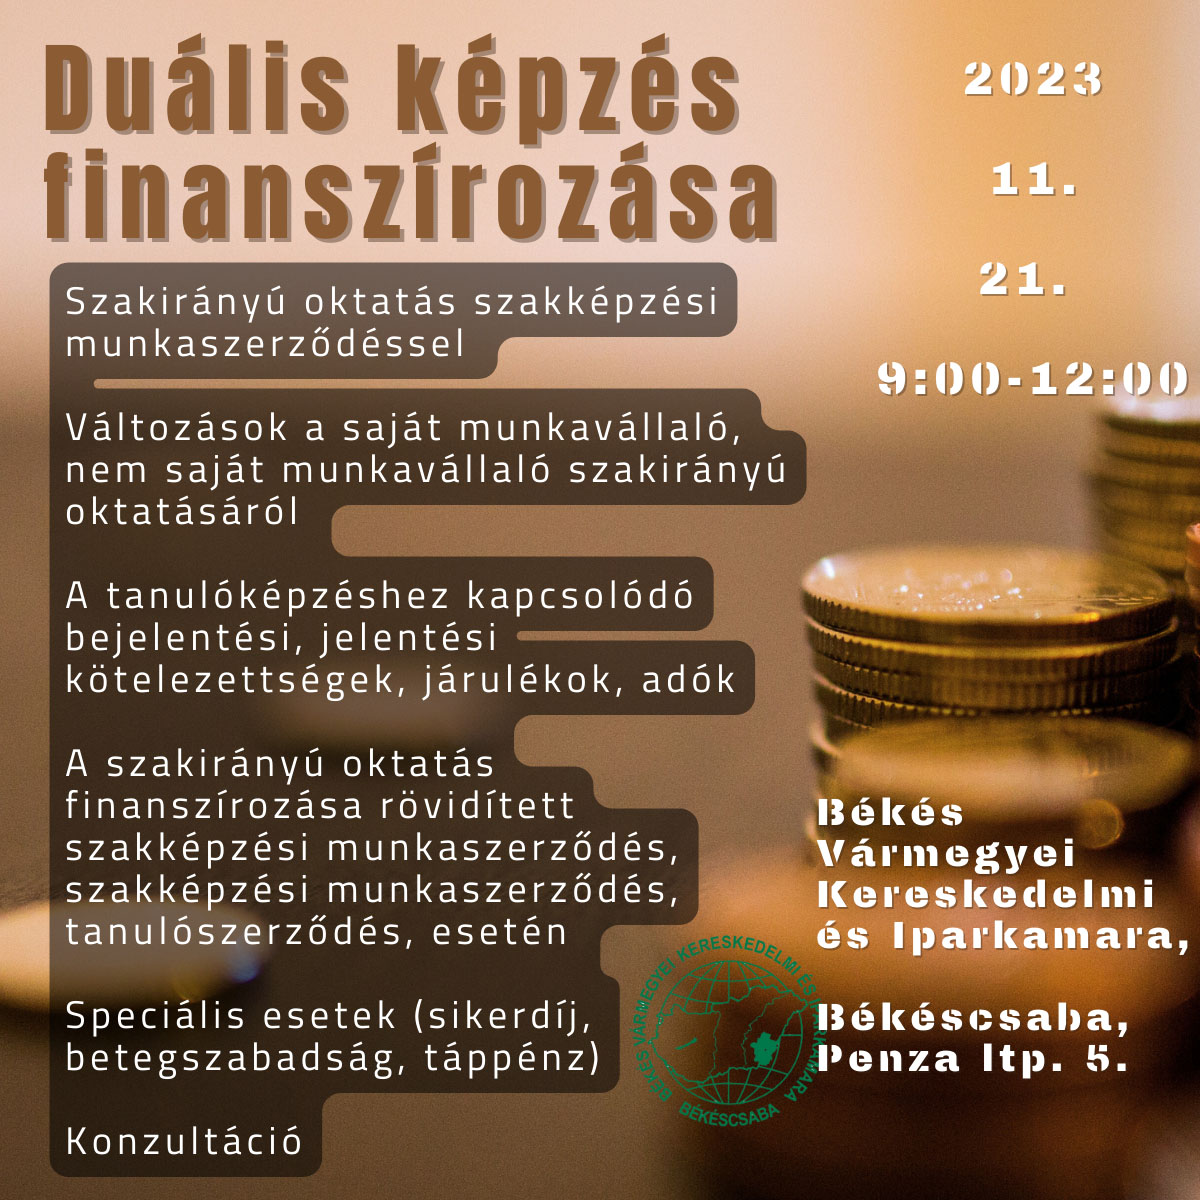 Dualis_kepzes_finanszirozasa_1_2023.11.21.jpg